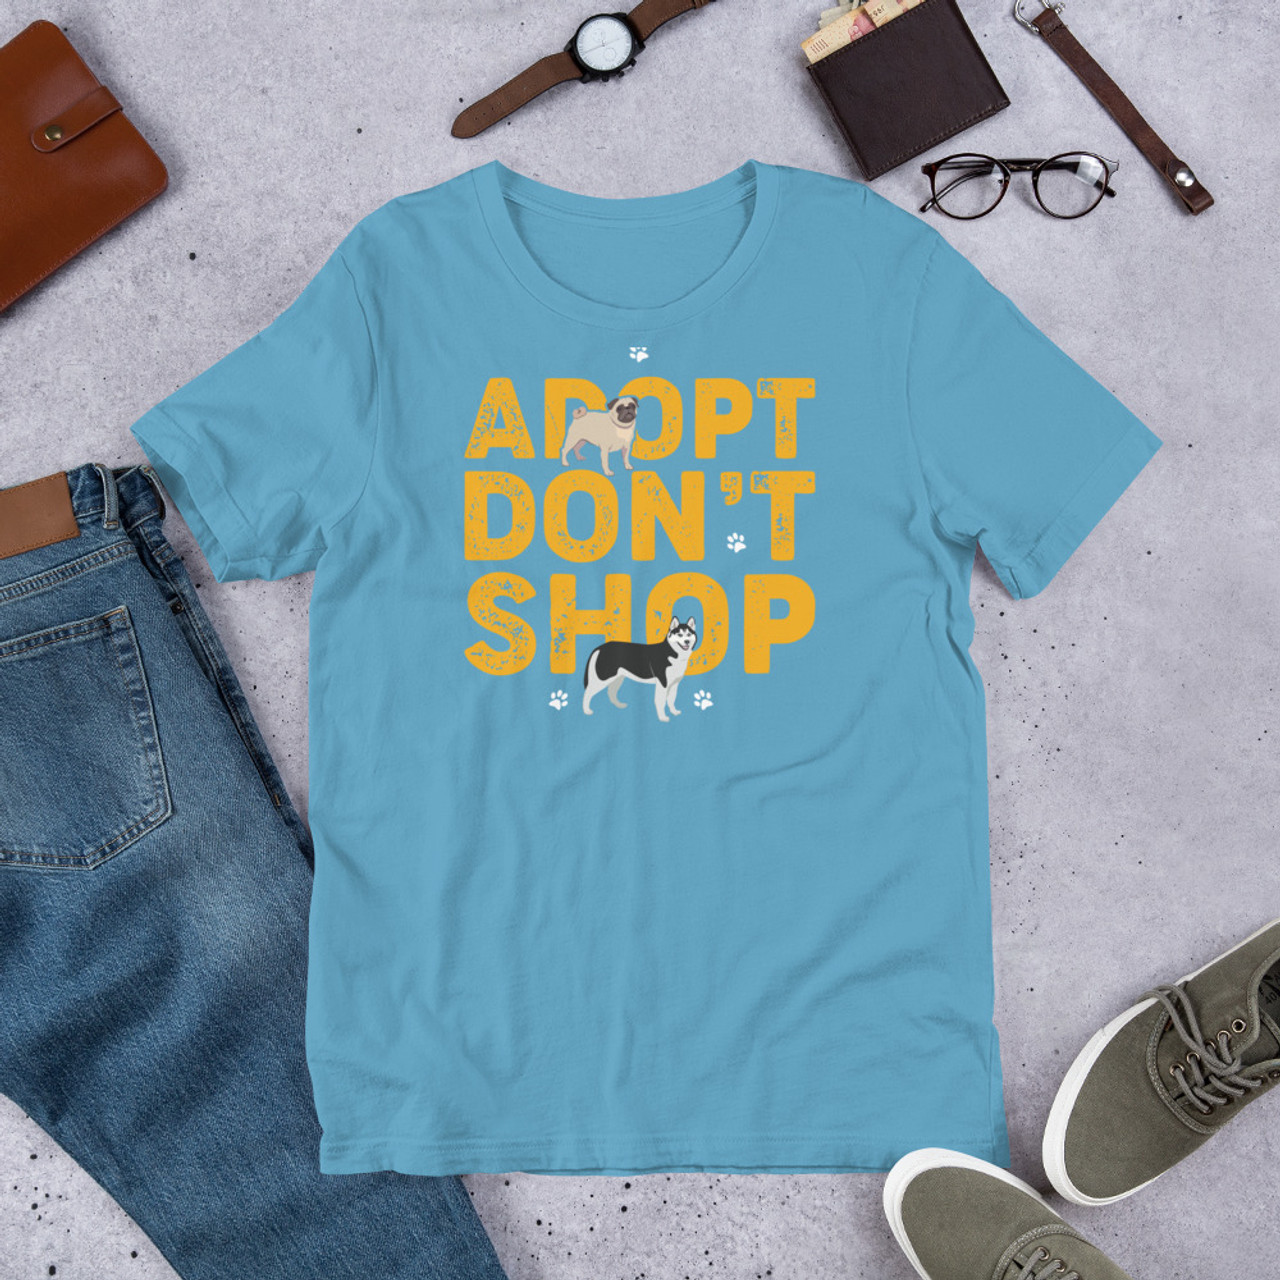 Ocean Blue T-Shirt - Bella + Canvas 3001 Adopt Don't Shop